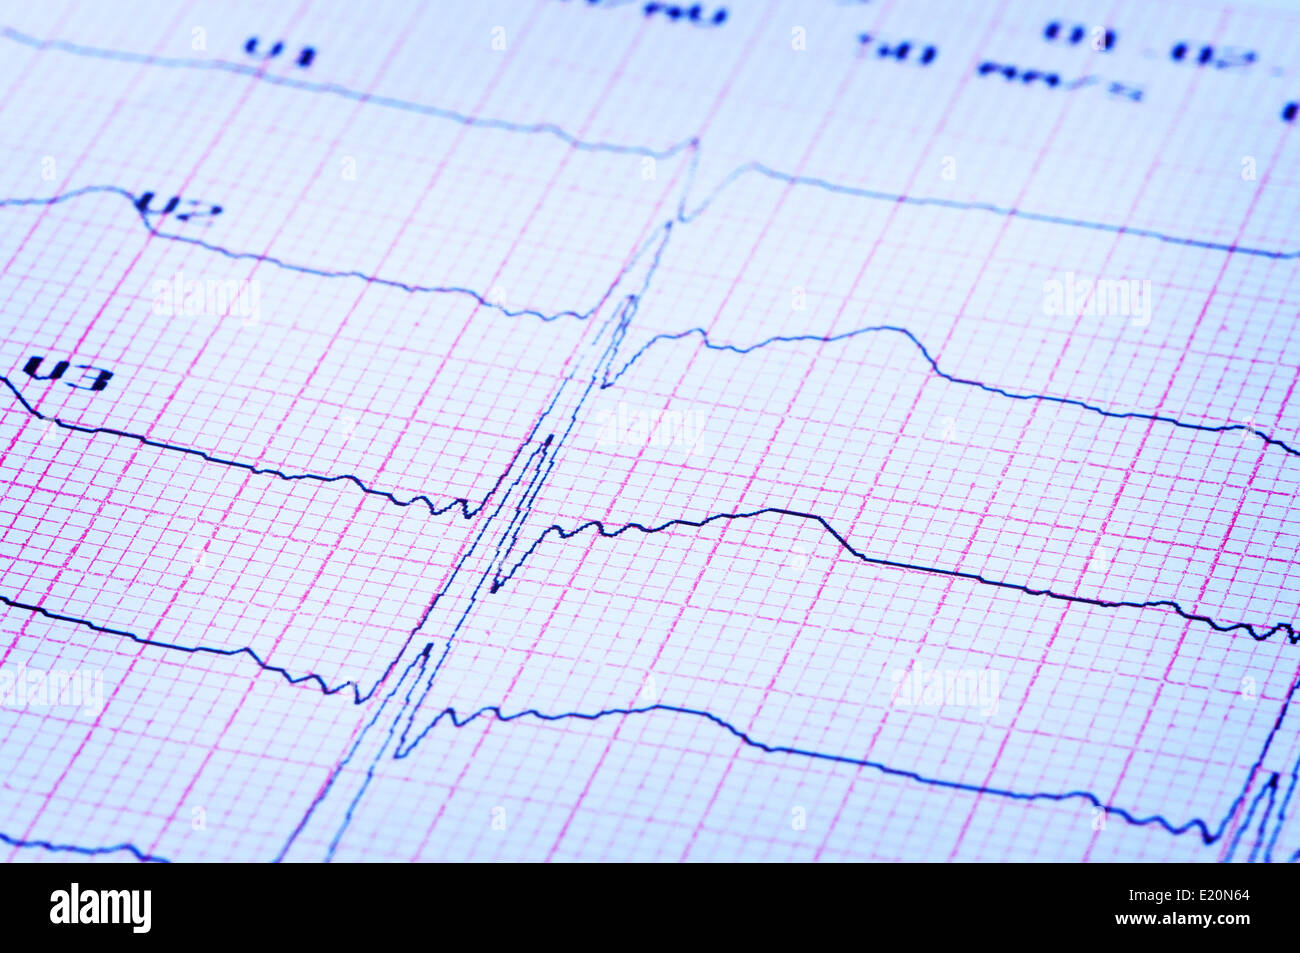 Cardiogram di cuore su carta. Foto Stock